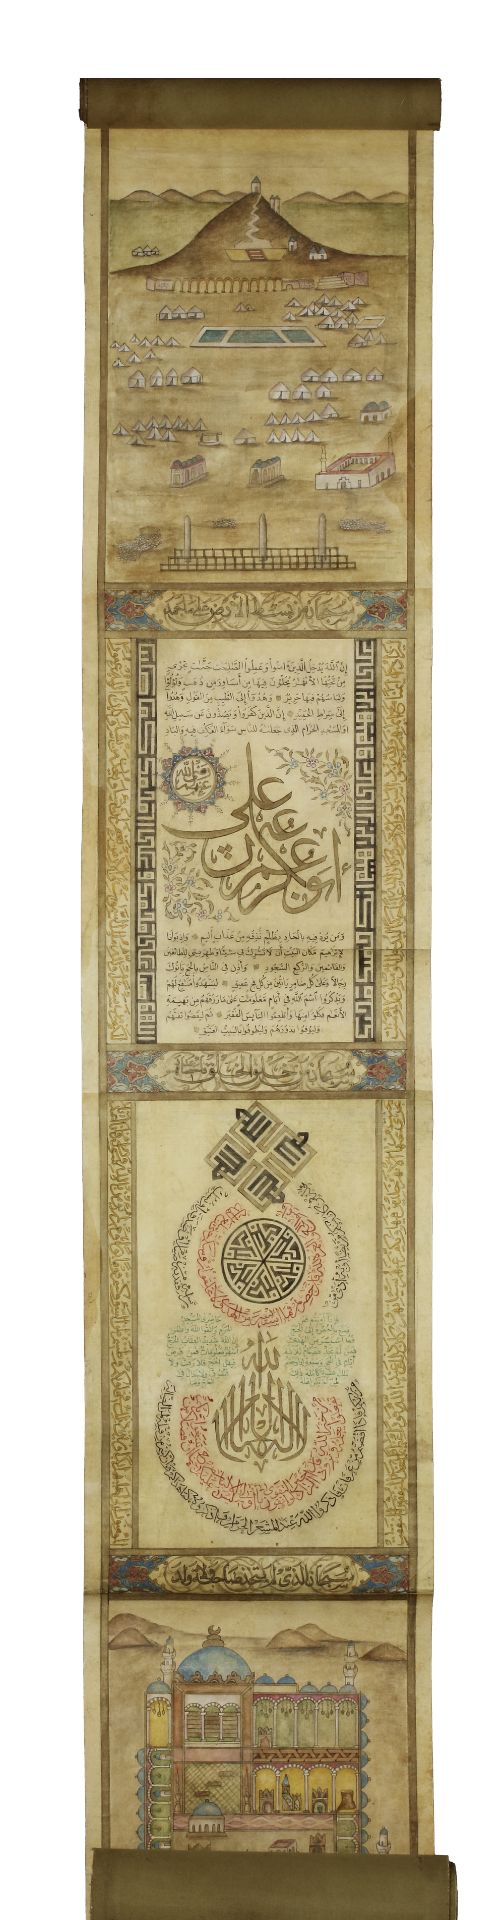 AN OTTOMAN ILLUMINATED HAJJ SCROLL, WRITTEN BY ISMAEL AHMED IN MECCA, DATED DHU HIJJA 1231 AH/1816 A - Image 7 of 12